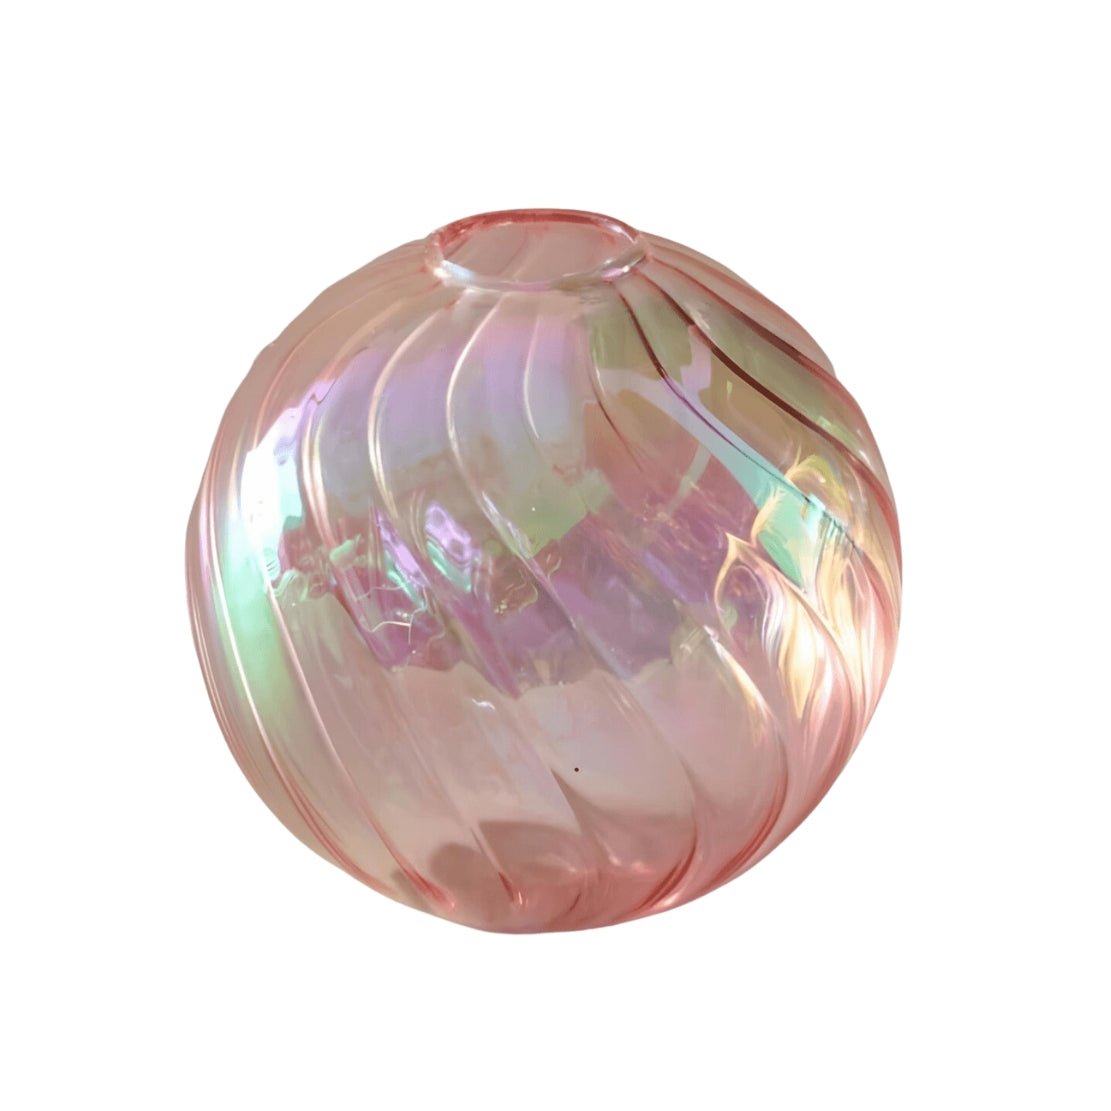 Pink, shiny glass ball vase